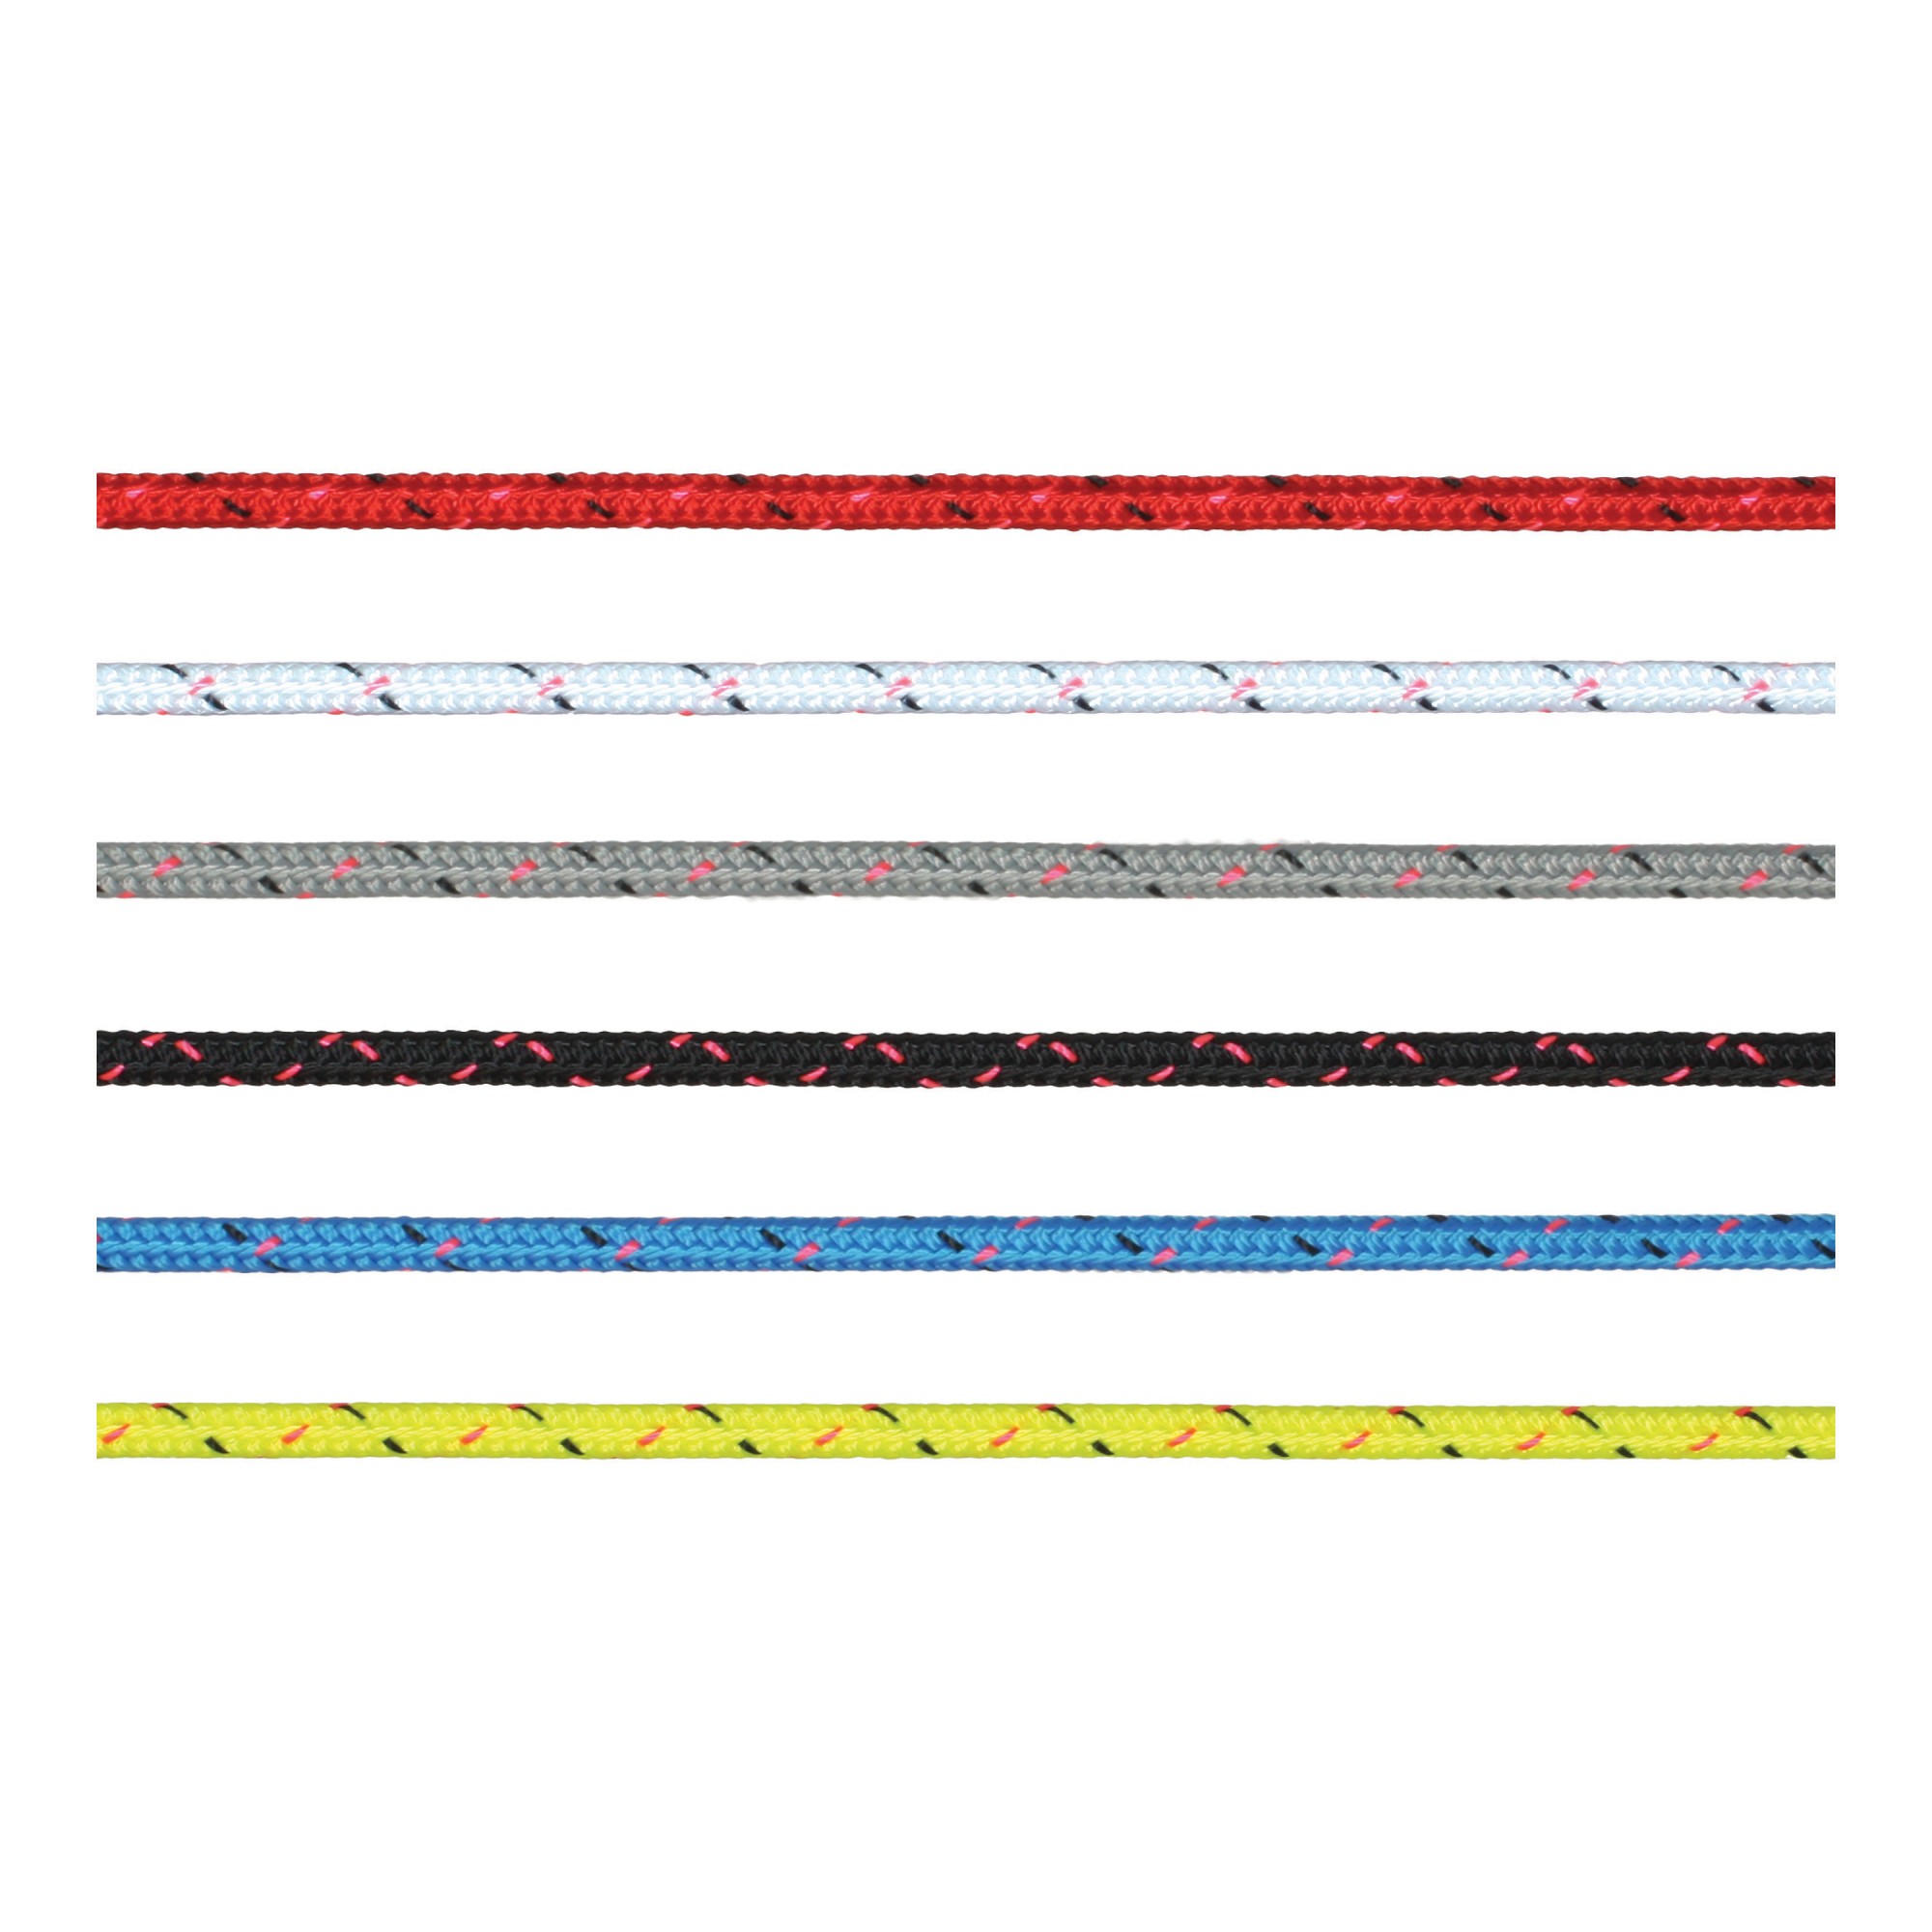 Трос Marlow Excel Pro из полиэстера цвета лайм 200 м диаметр 4 мм, Osculati 06.465.04LI